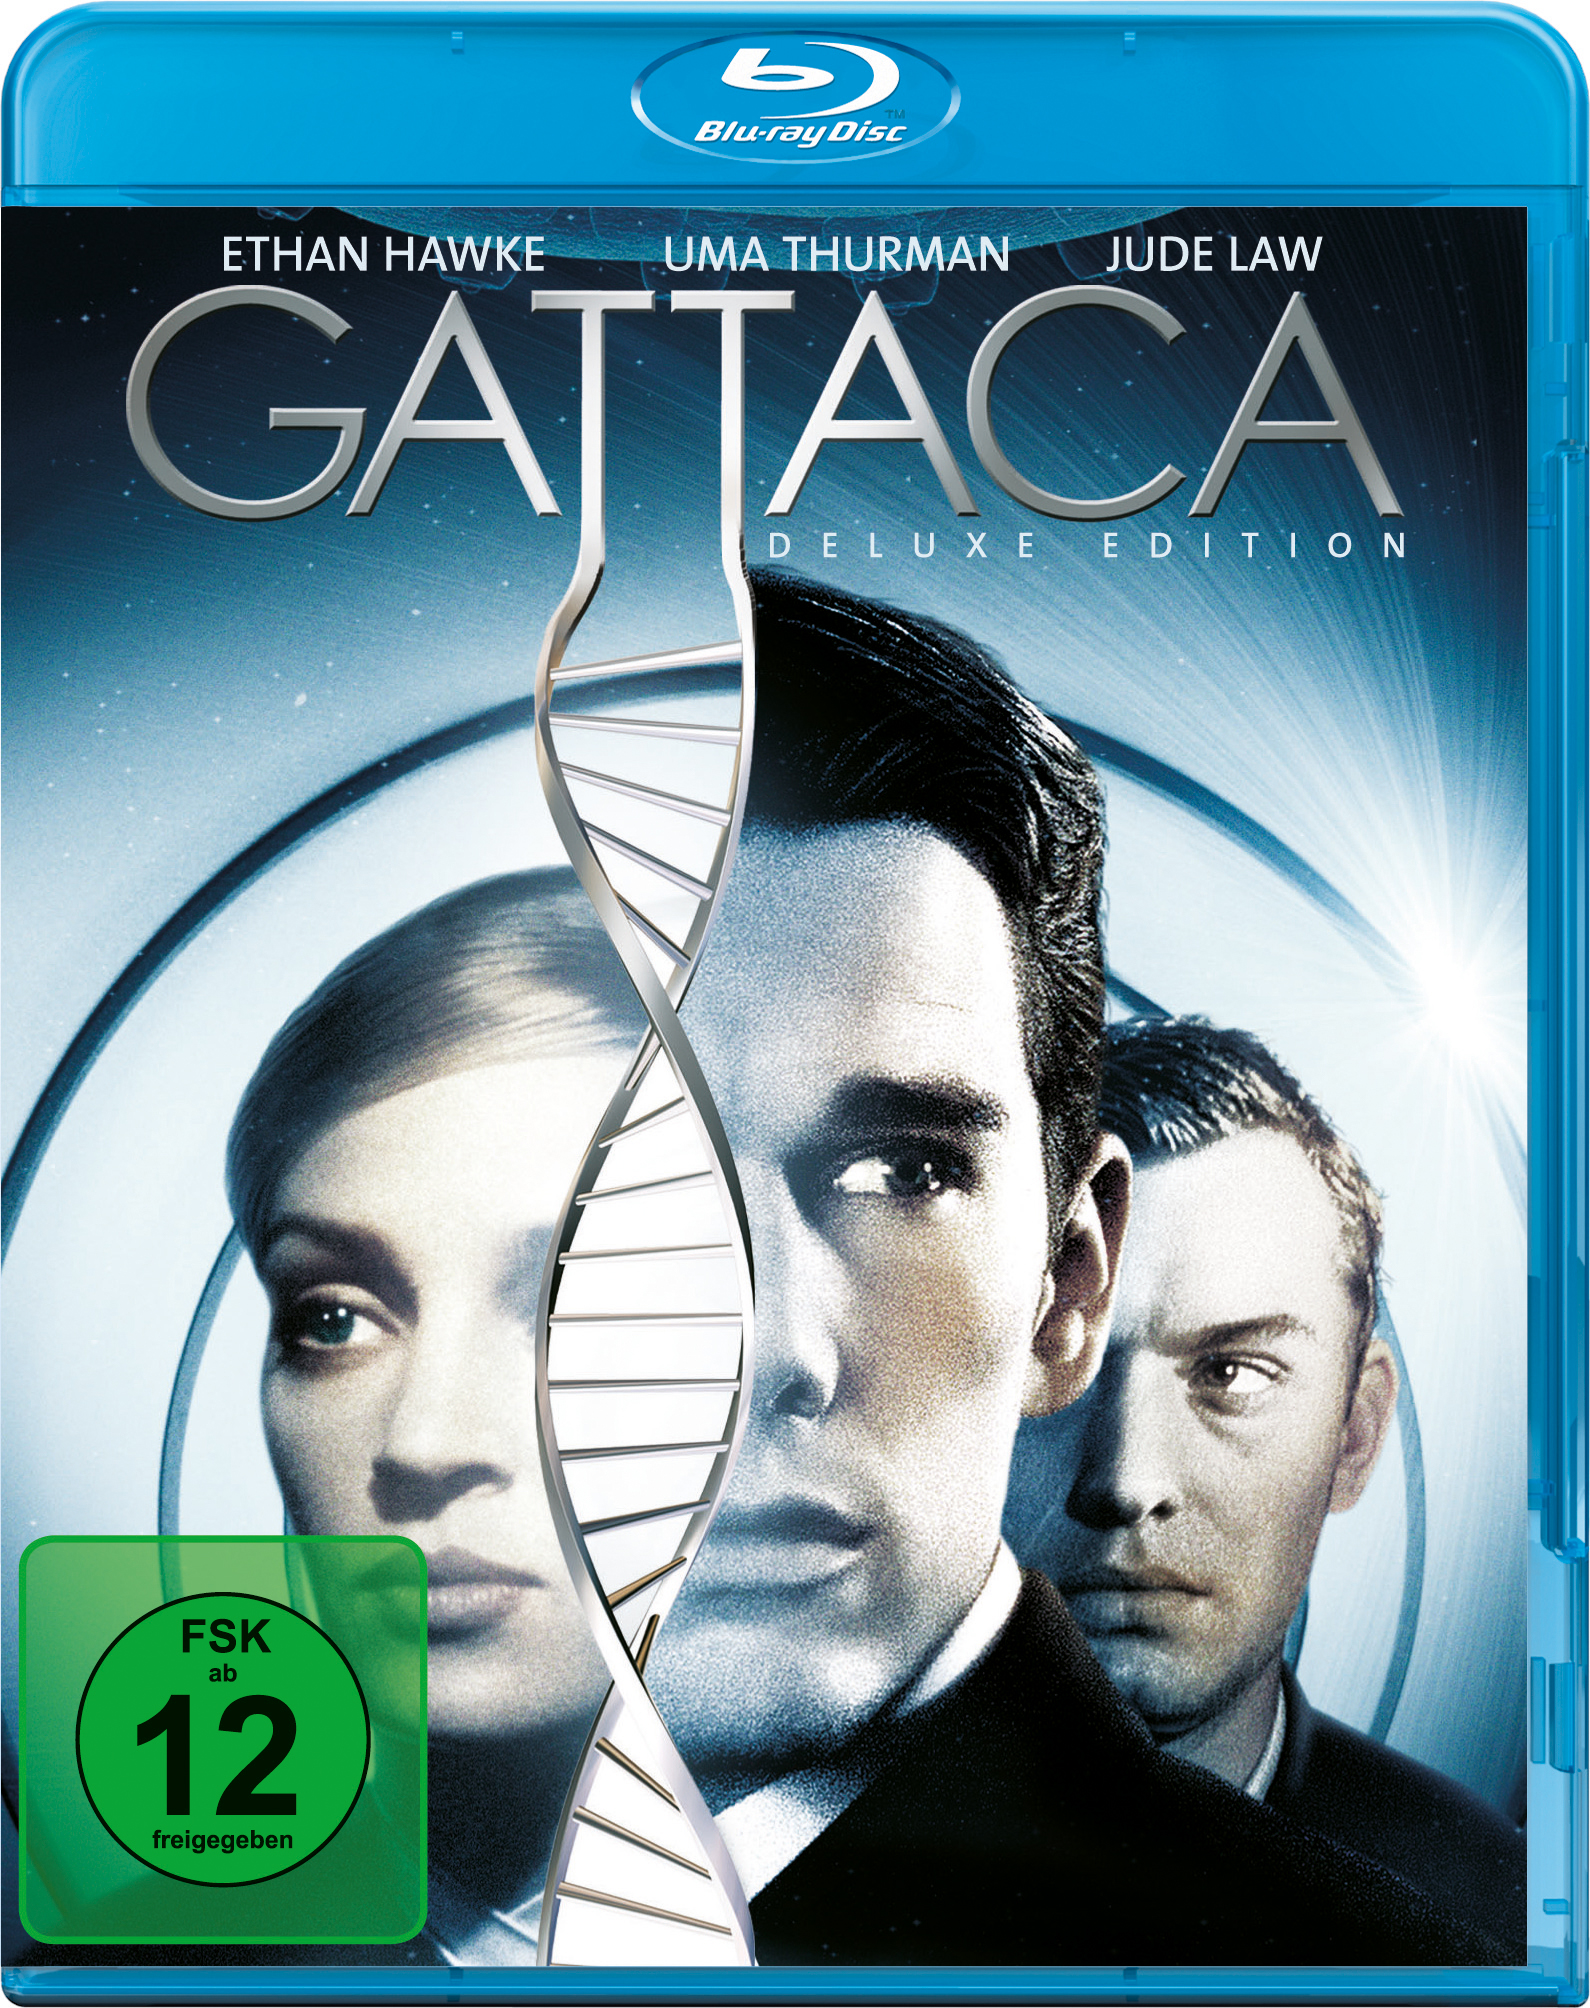 Blu-ray (Deluxe Edition) Gattaca